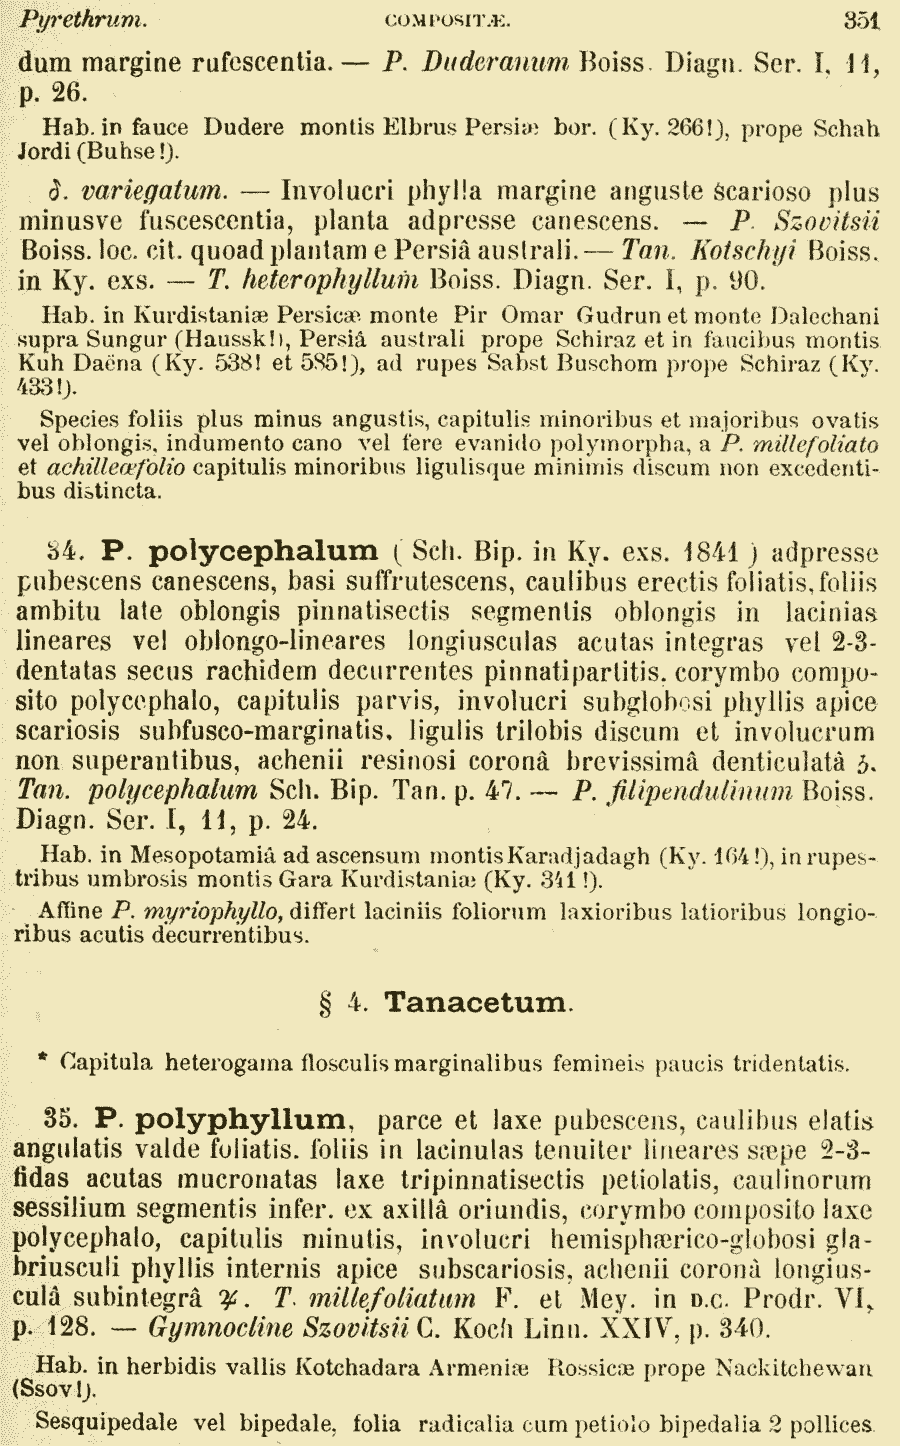 Pyrethrum_polyphyllum_1a.png